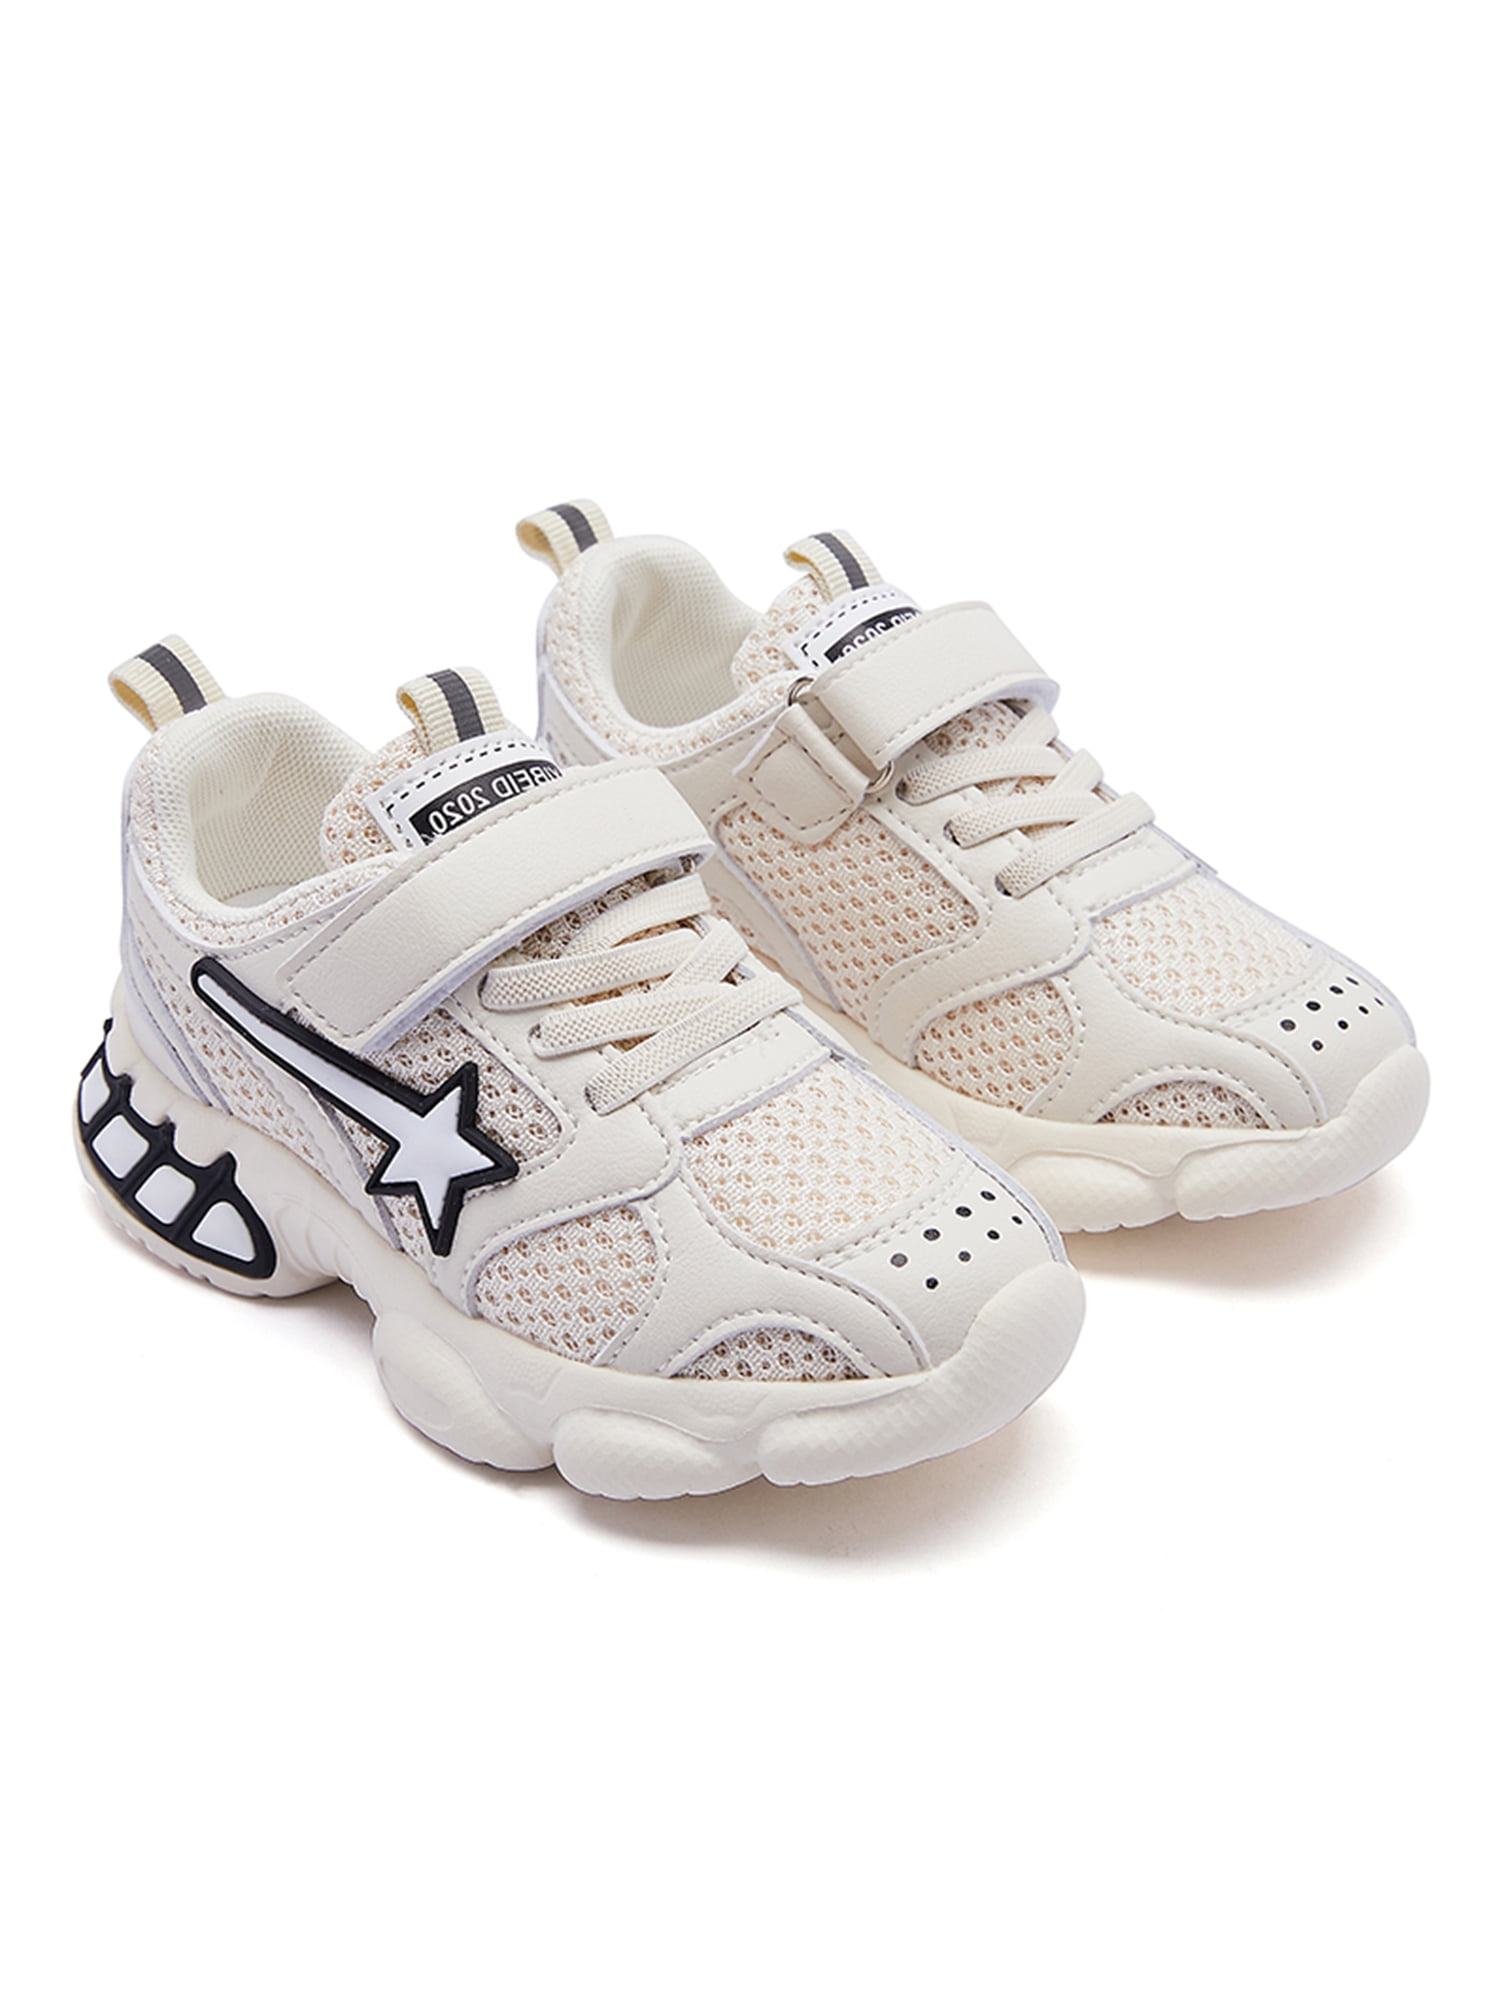 KVbaby Kids Ultralight Tennis Shoes Mesh Sport Walking Sneakers Fashion Running Shoes for Boys Girls 